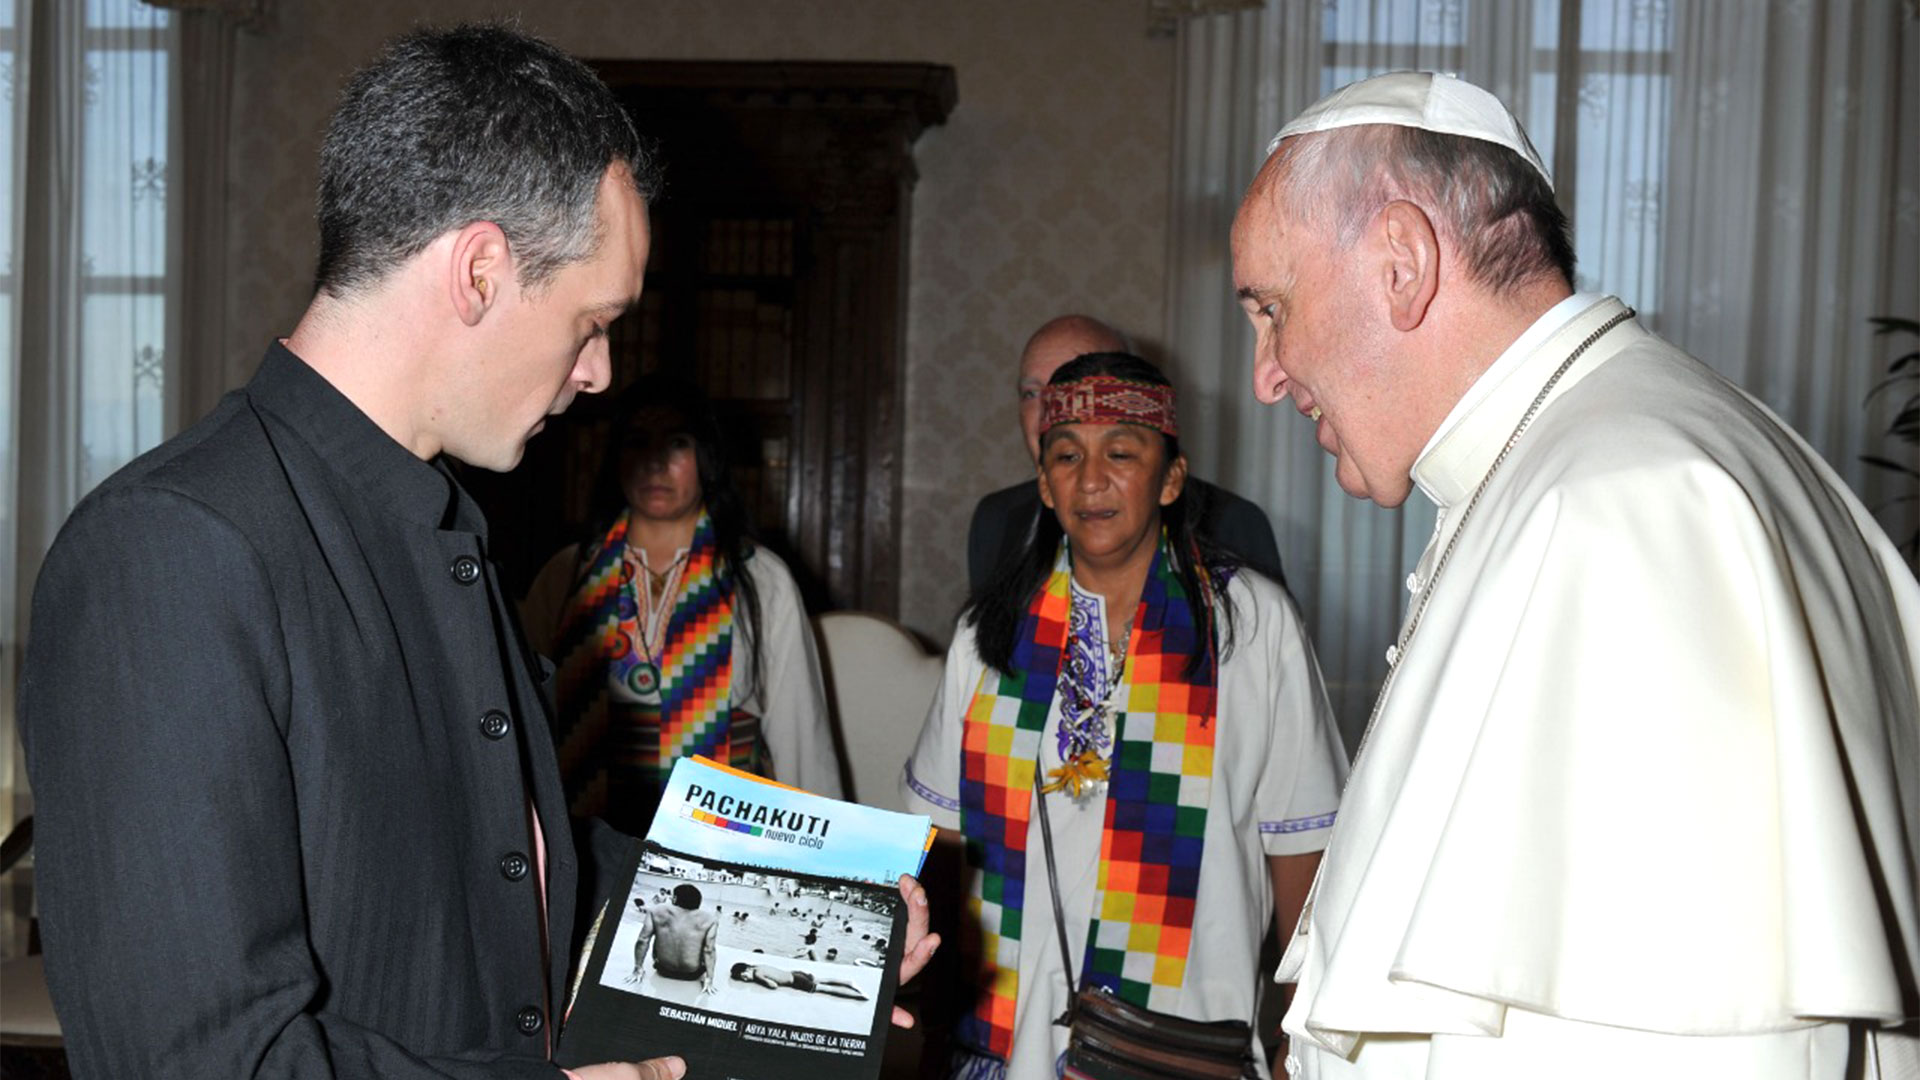 Pope Francis receives a copy of Pachakuti magazine